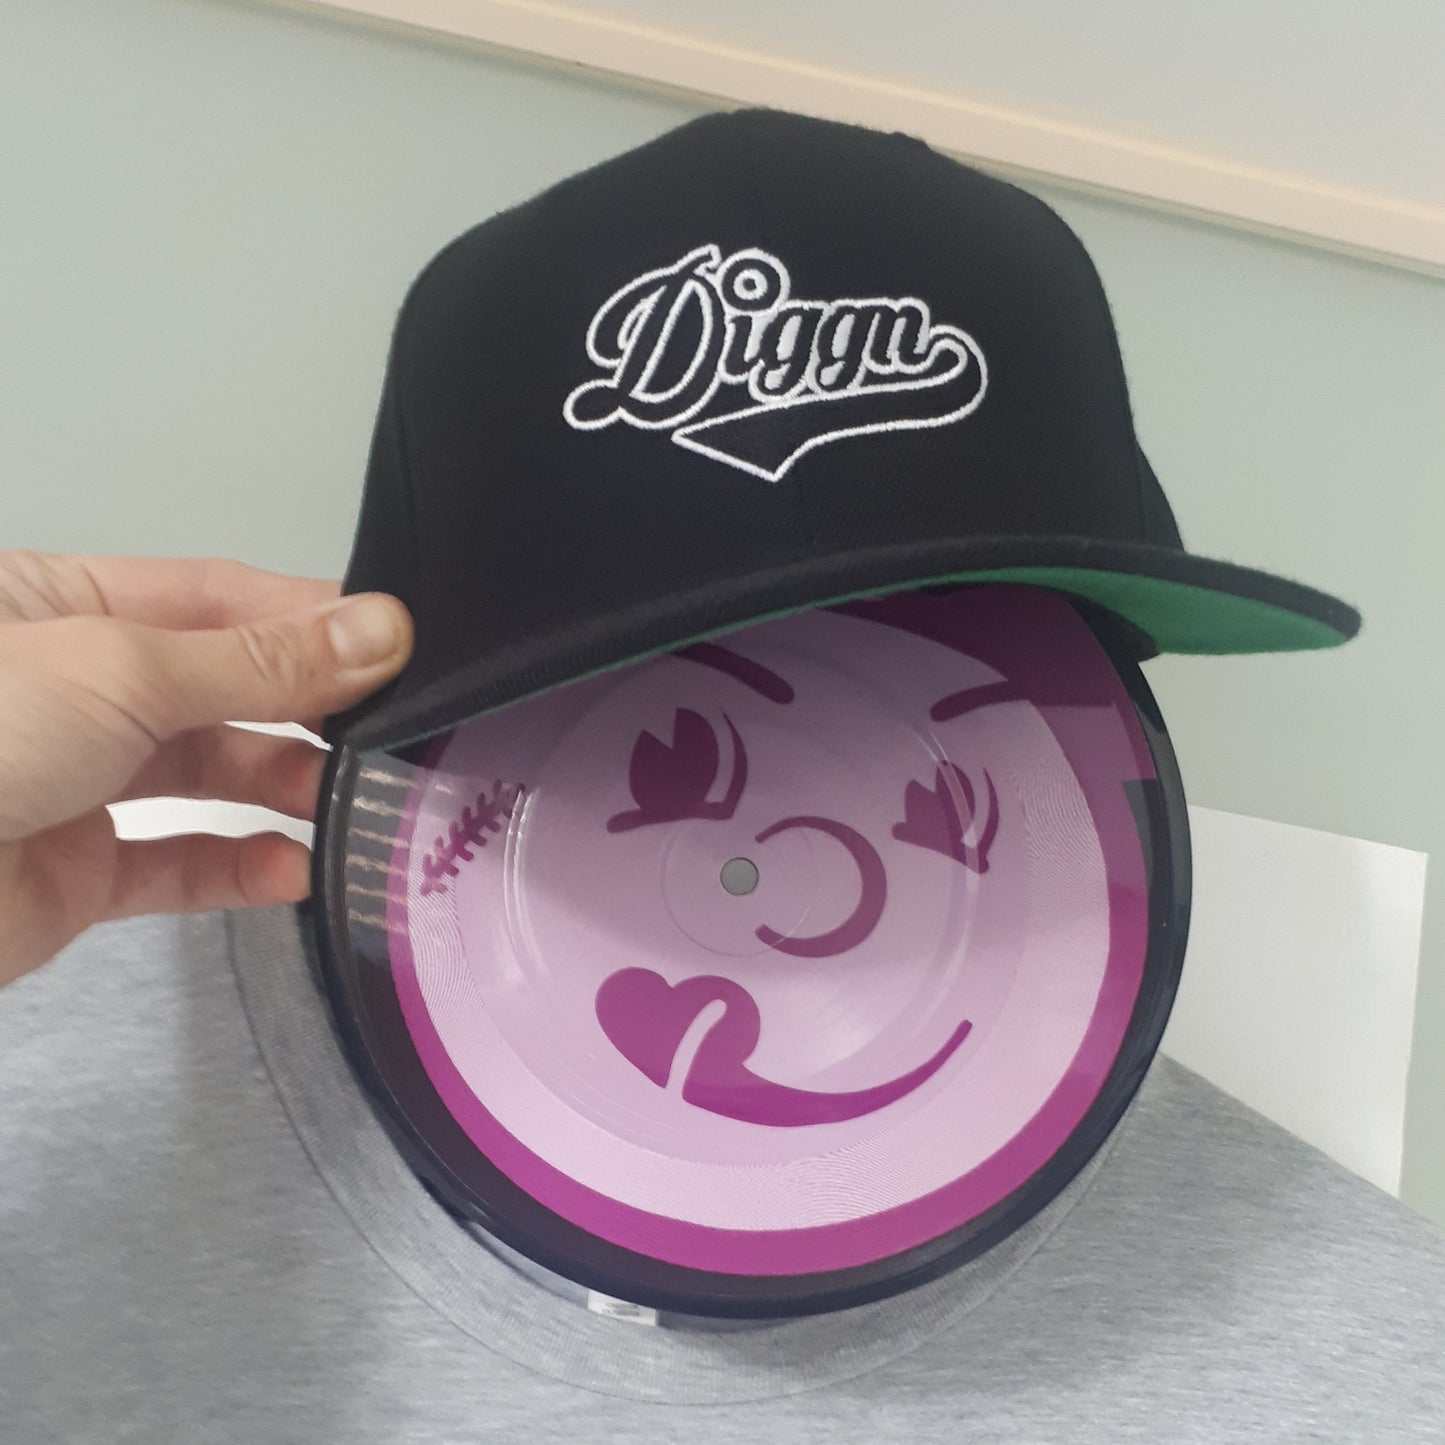 Diggn - Embroidered Snapback Hat - Black